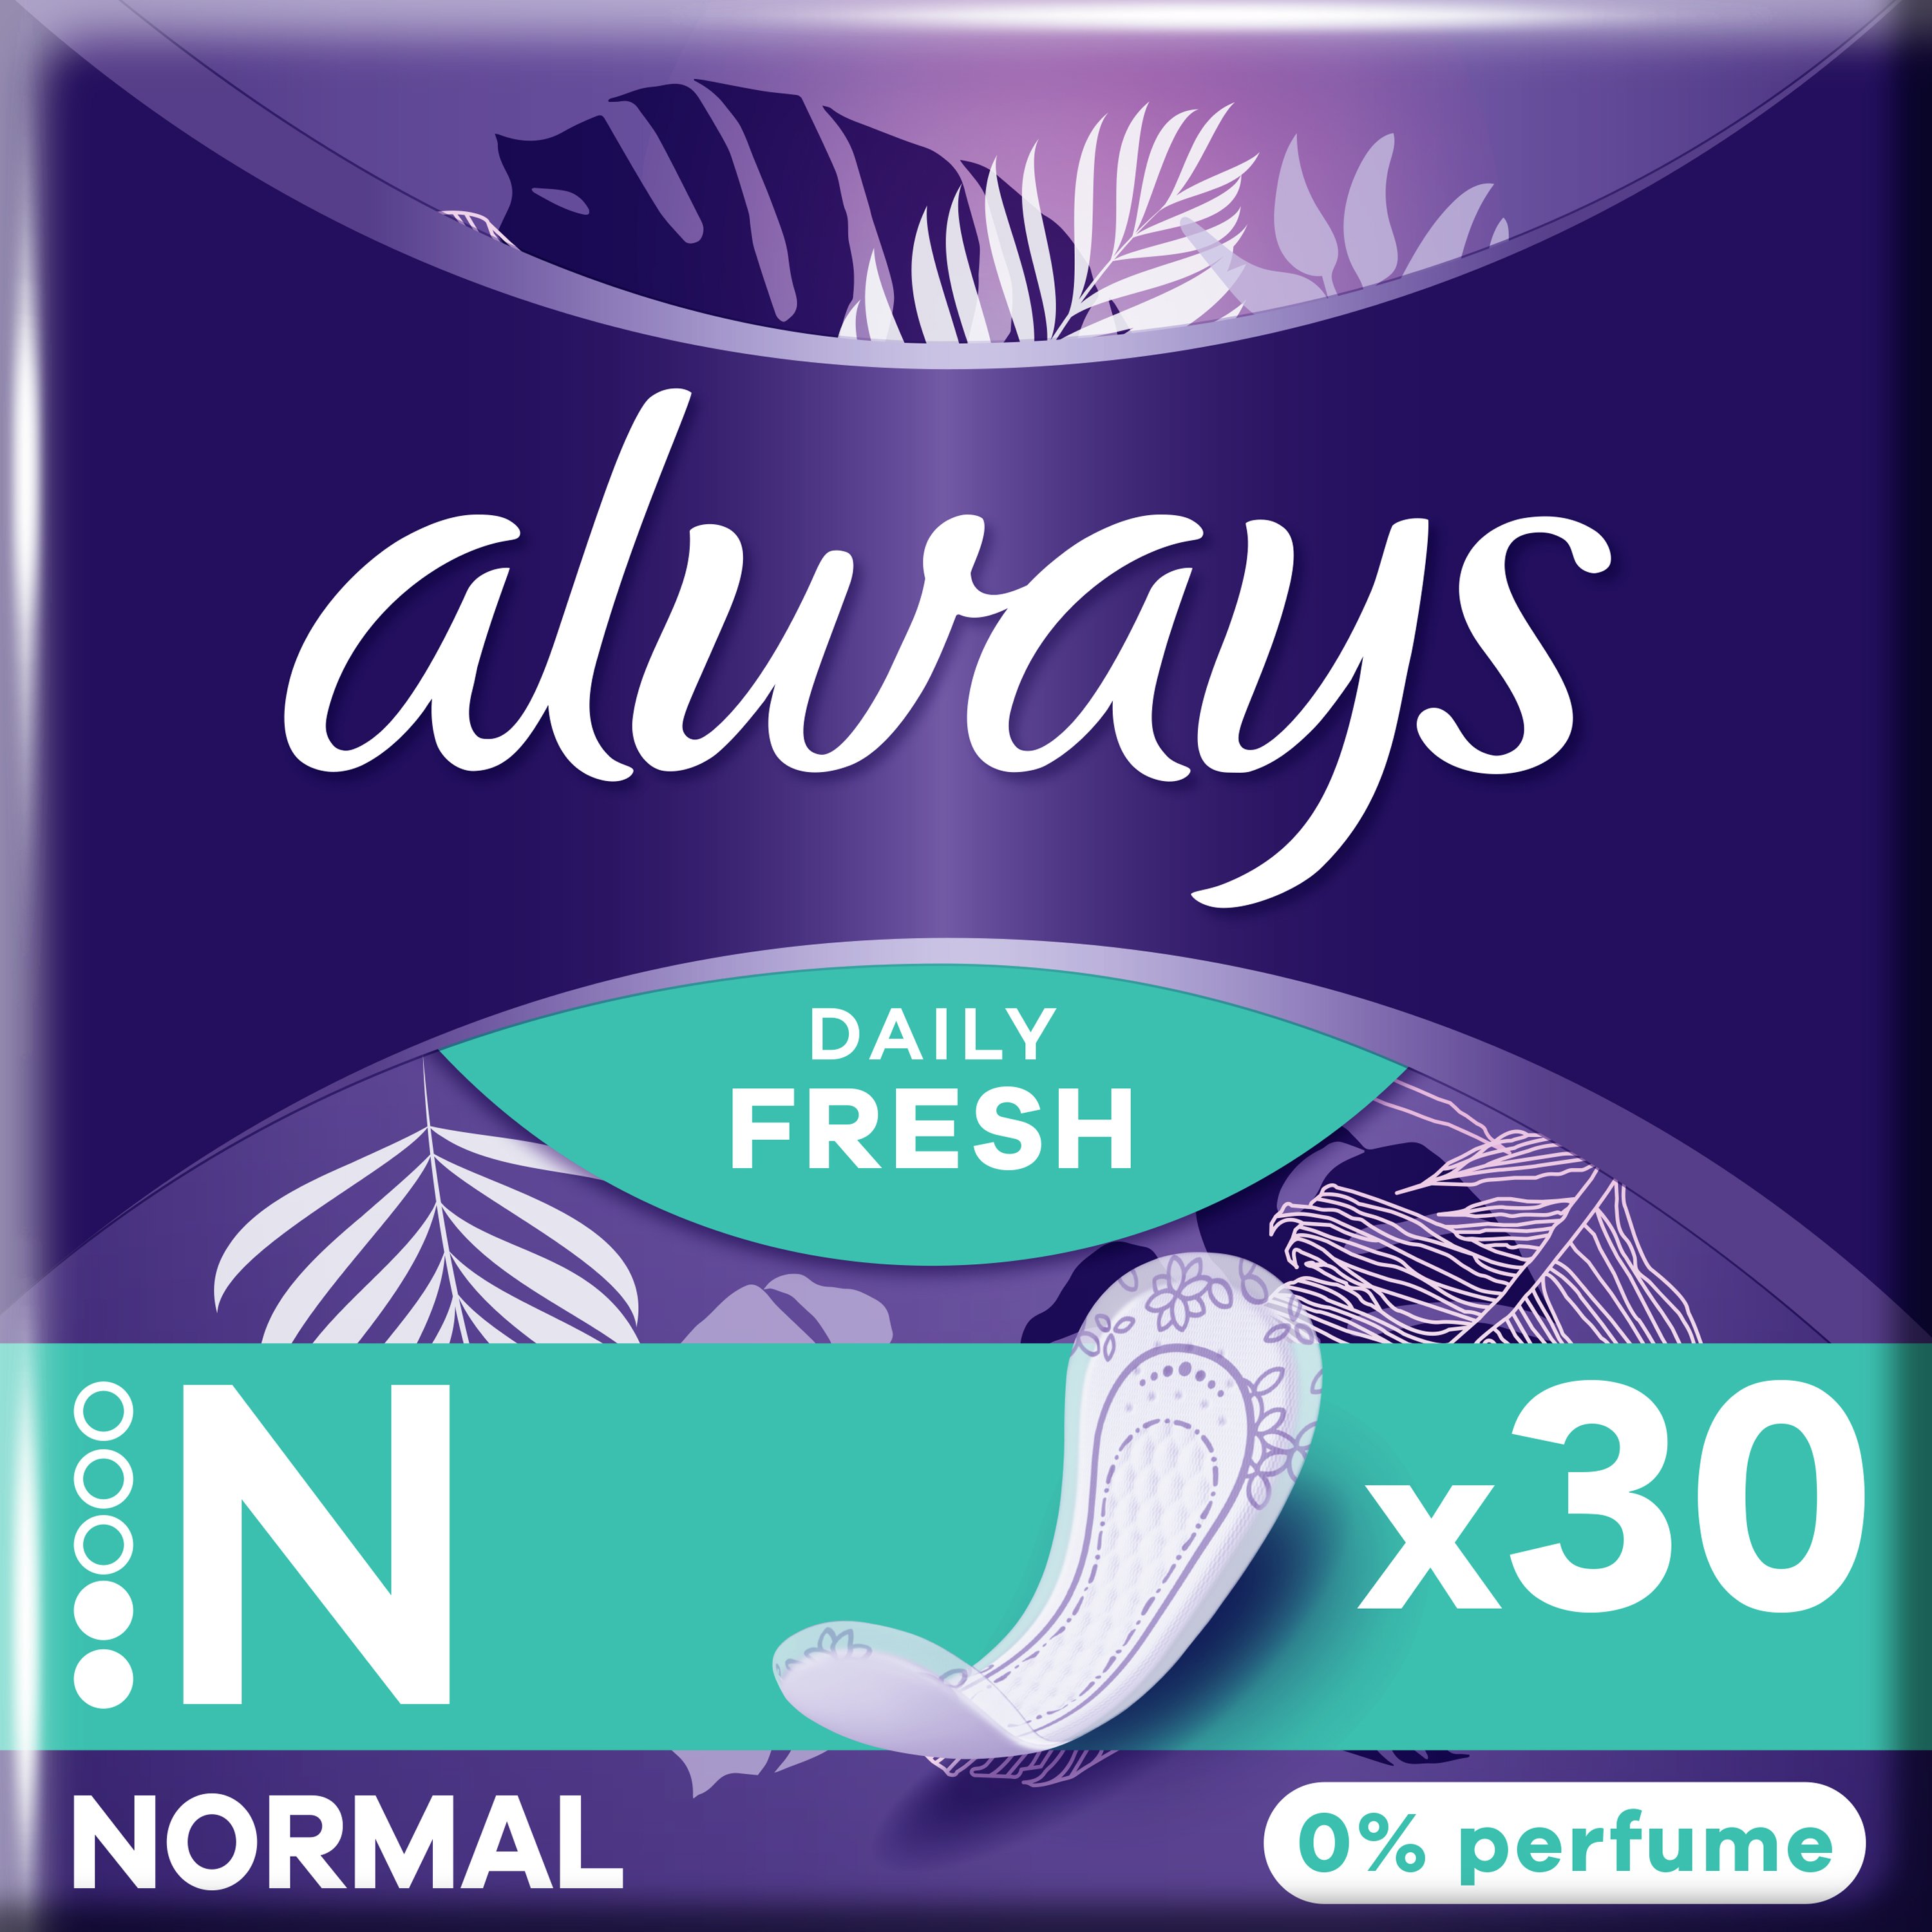 Always Daily Fresh Normal 0% Perfume Άνετα Σερβιετάκια Χωρίς Άρωμα για Καθημερινή Προστασία 30 Τεμάχια